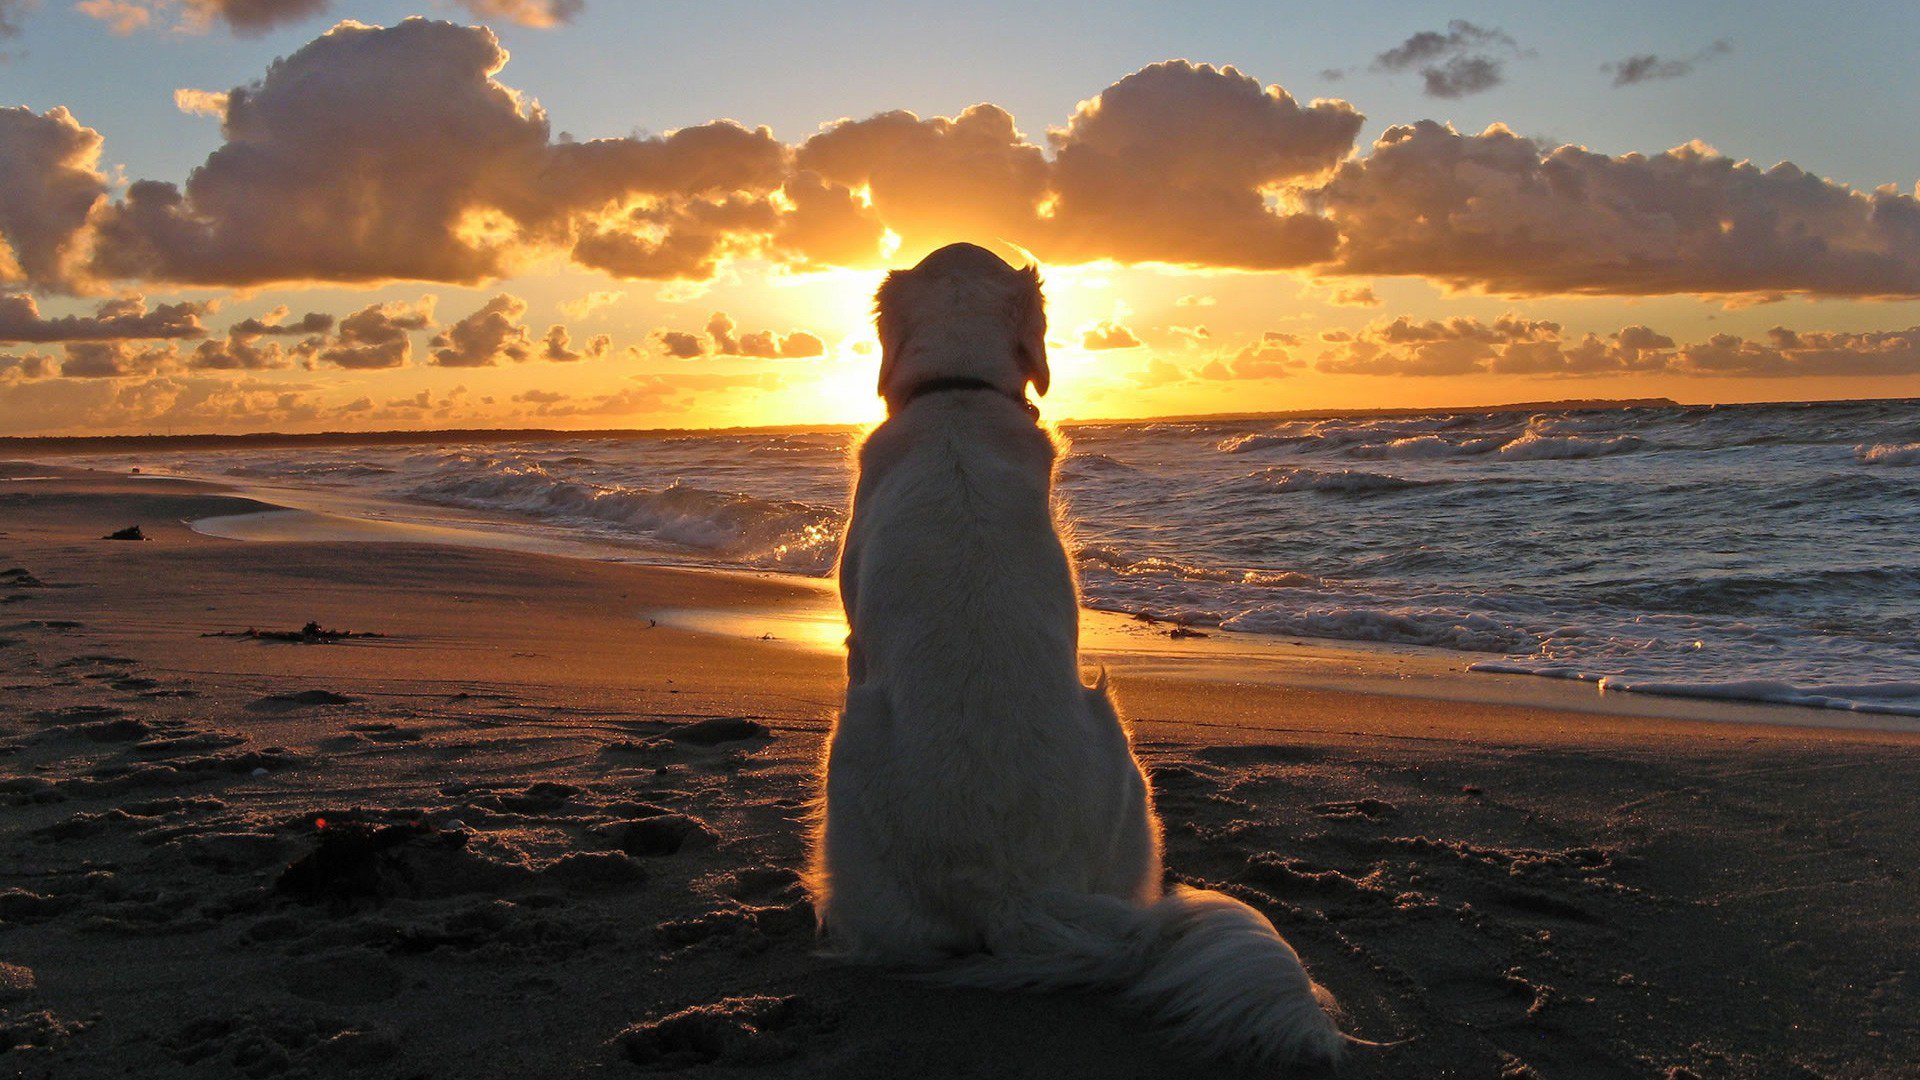 Dog on Beach at Sunset HD Wallpaper FullHDWpp   Full HD